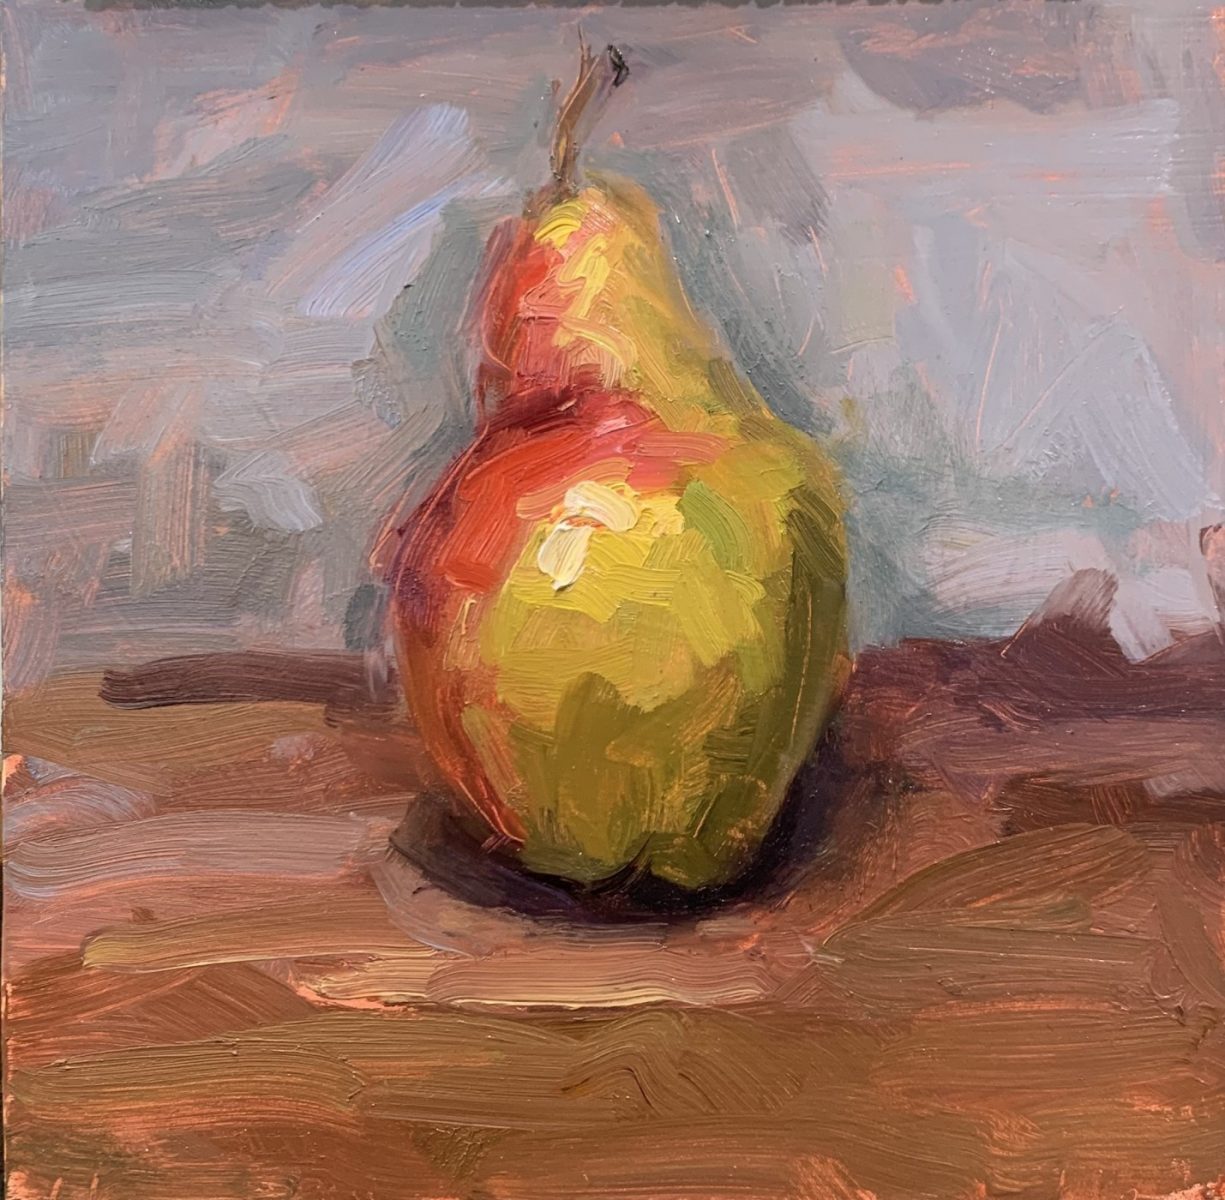 Oil painting of pear by Lael Weyenberg